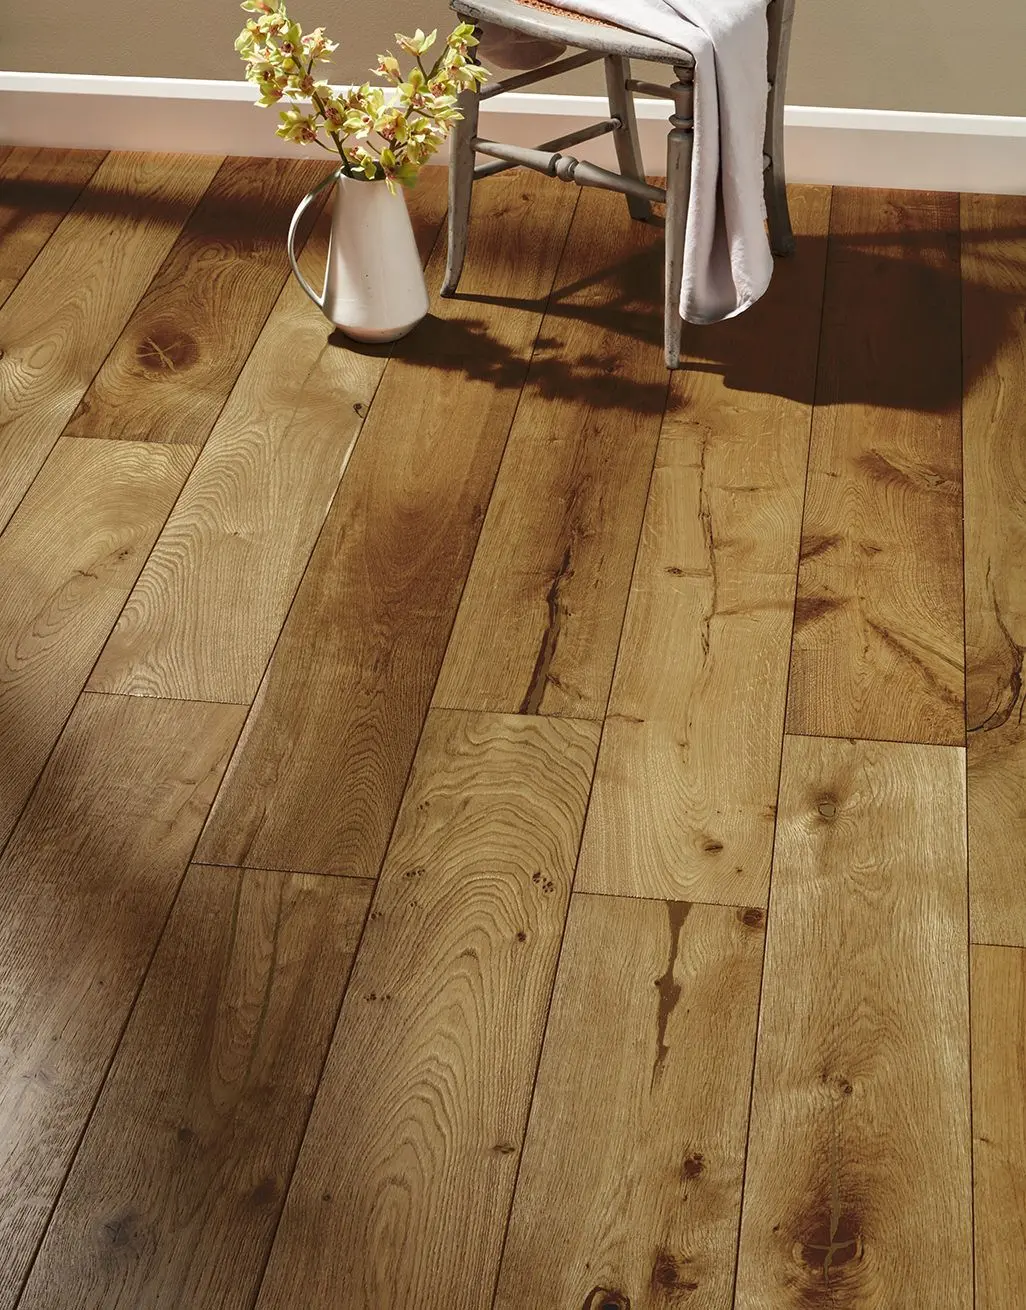 smoked brushed oak flooring - How do you clean brushed oak floors